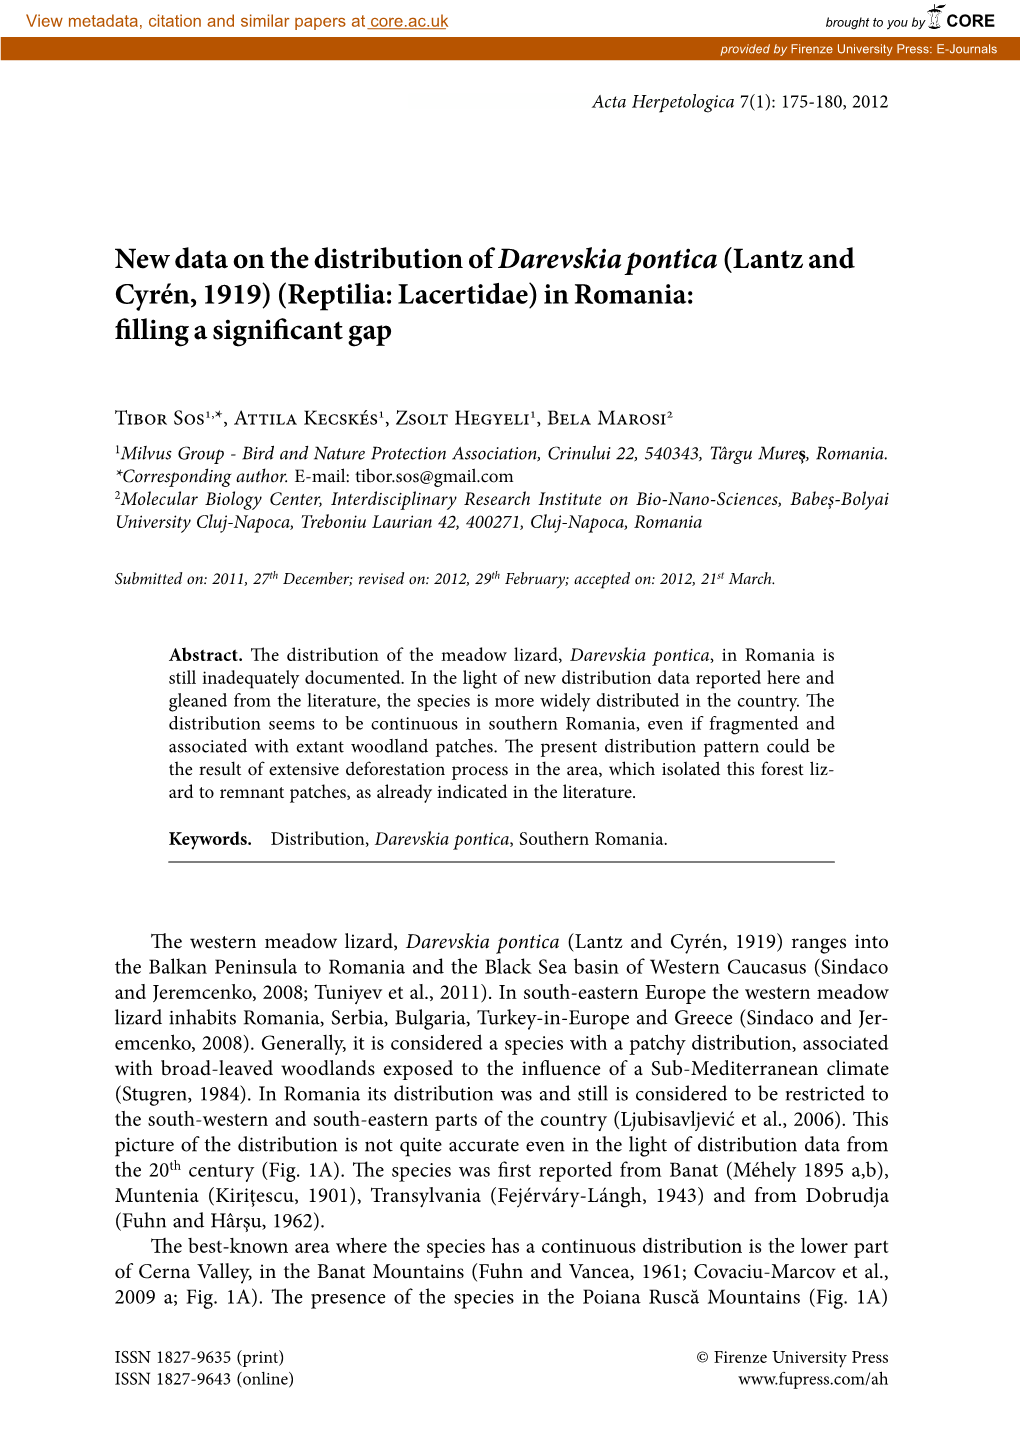 New Data on the Distribution of Darevskia Pontica(Lantz and Cyrén